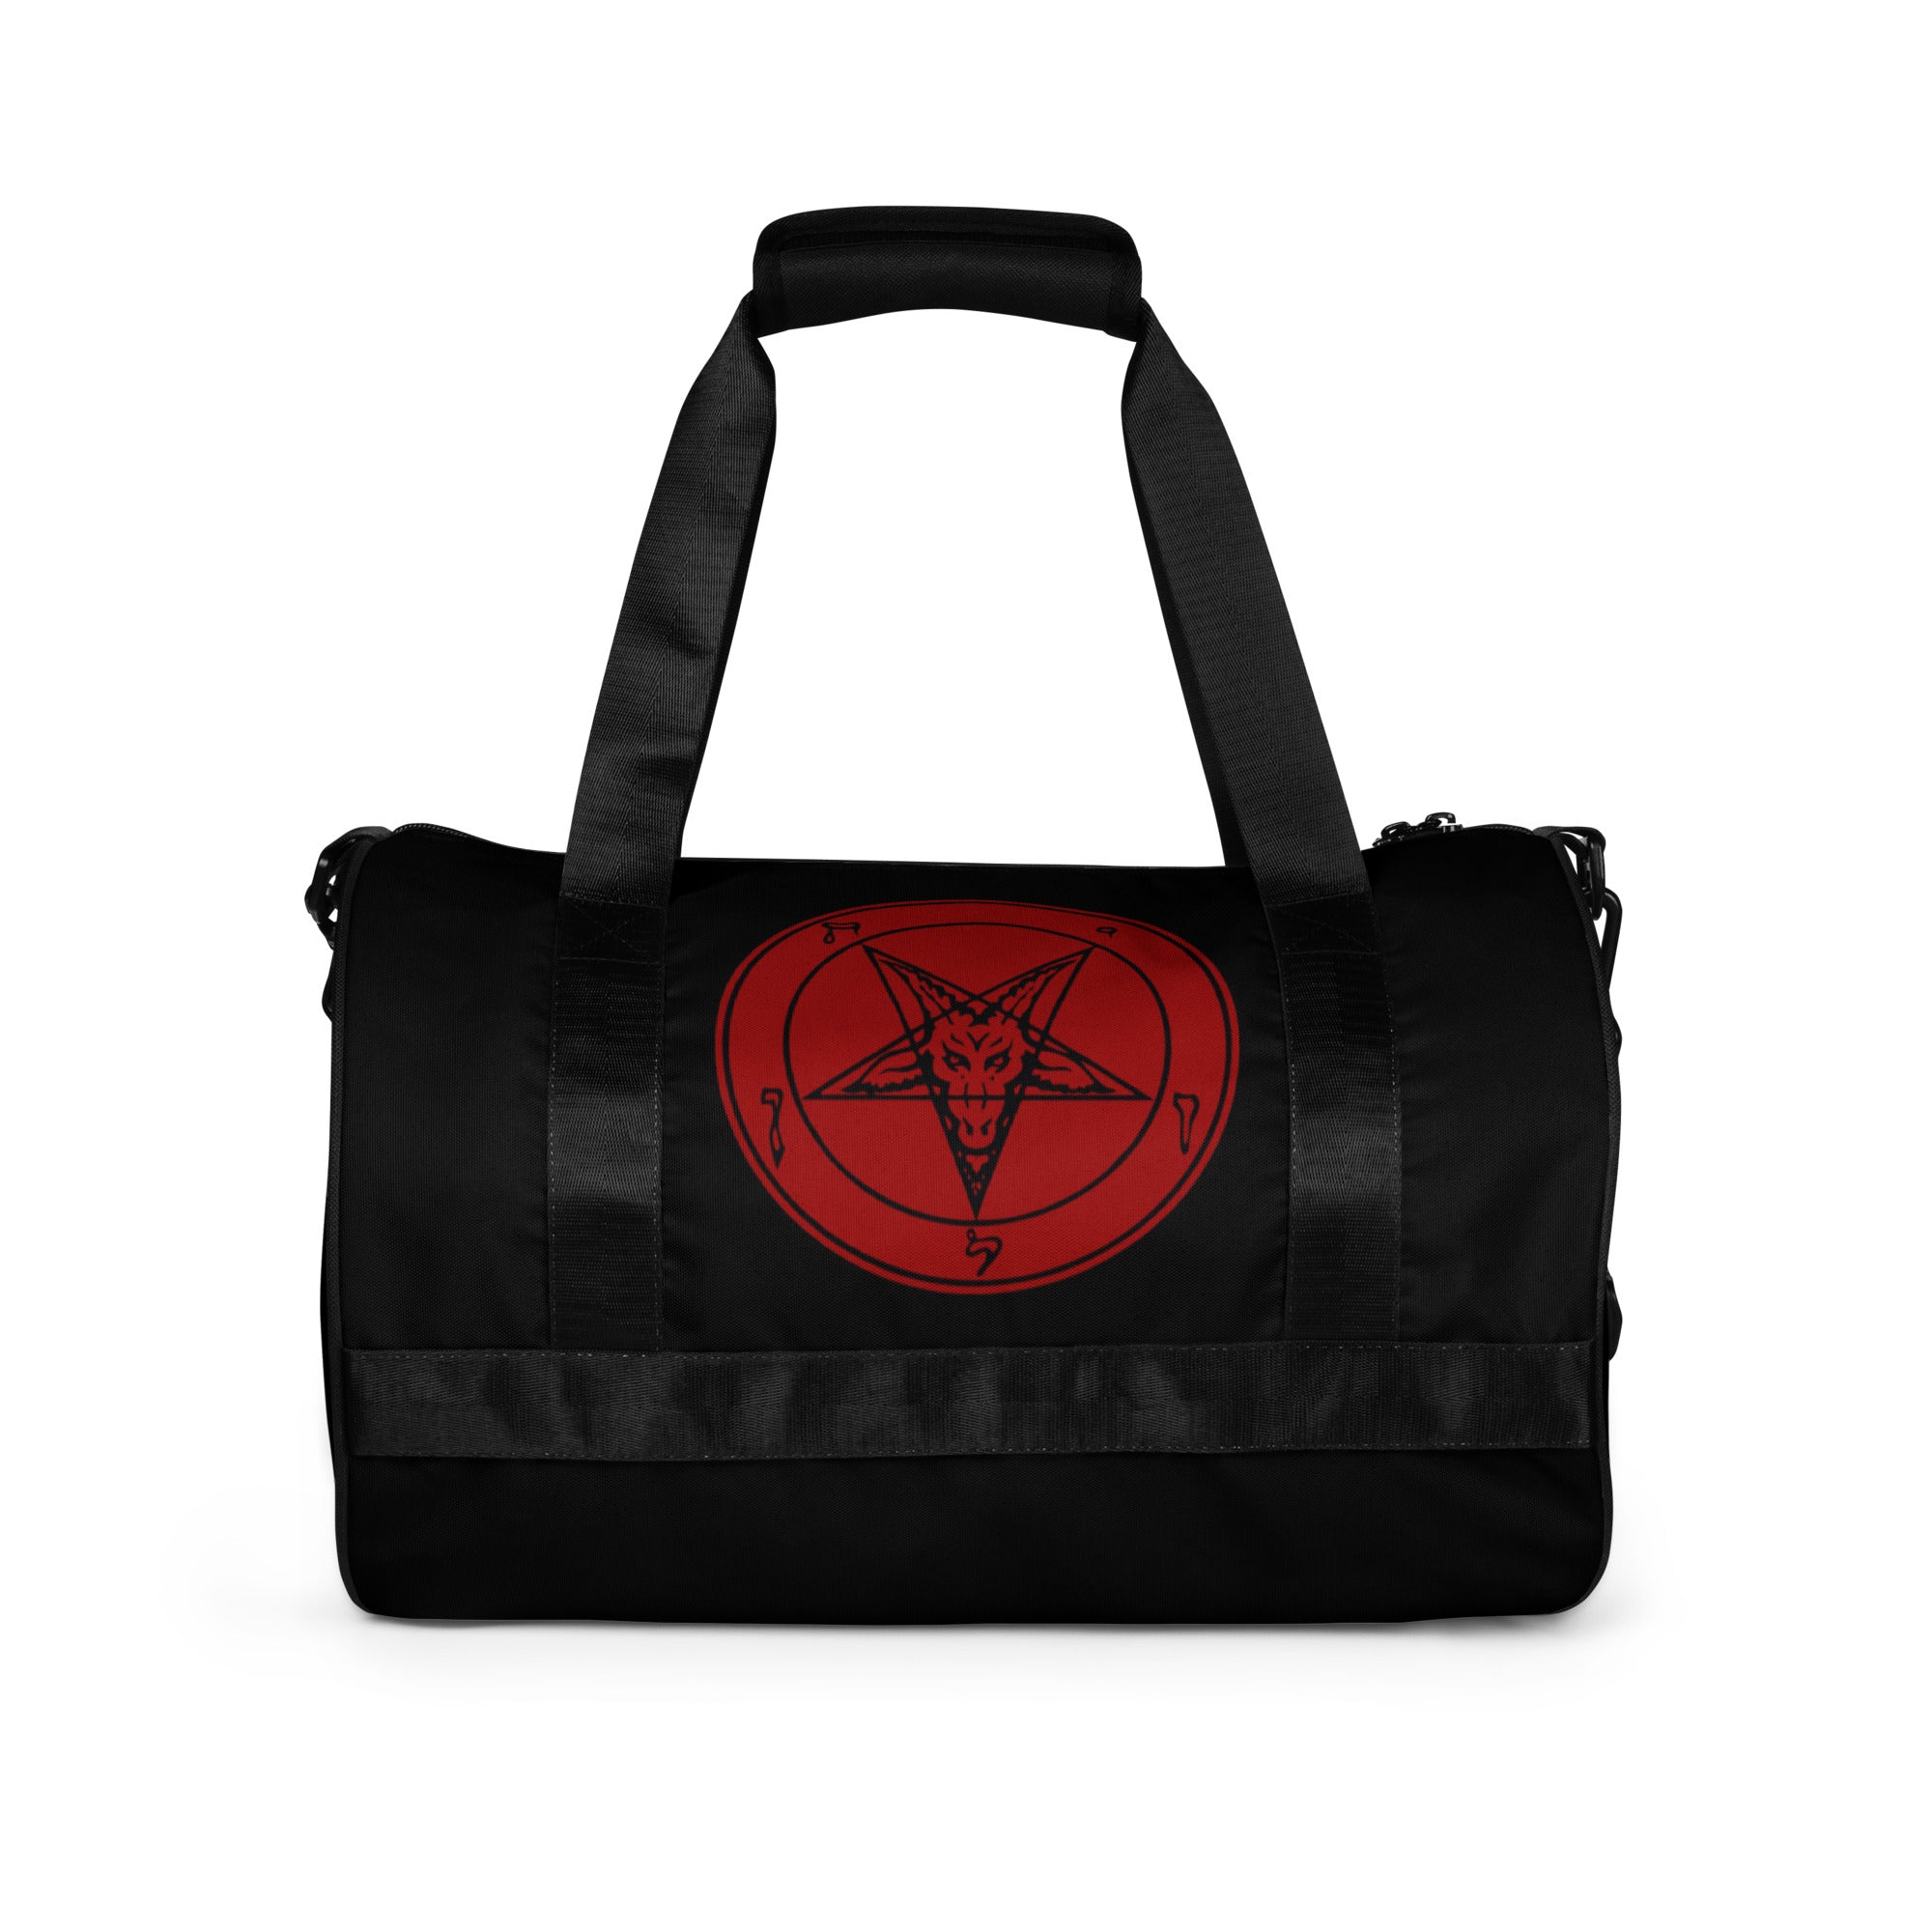 Satanic Symbols Sigil of Baphomet, Lucifer, Leviathan Cross Duffle Gym bag - Edge of Life Designs